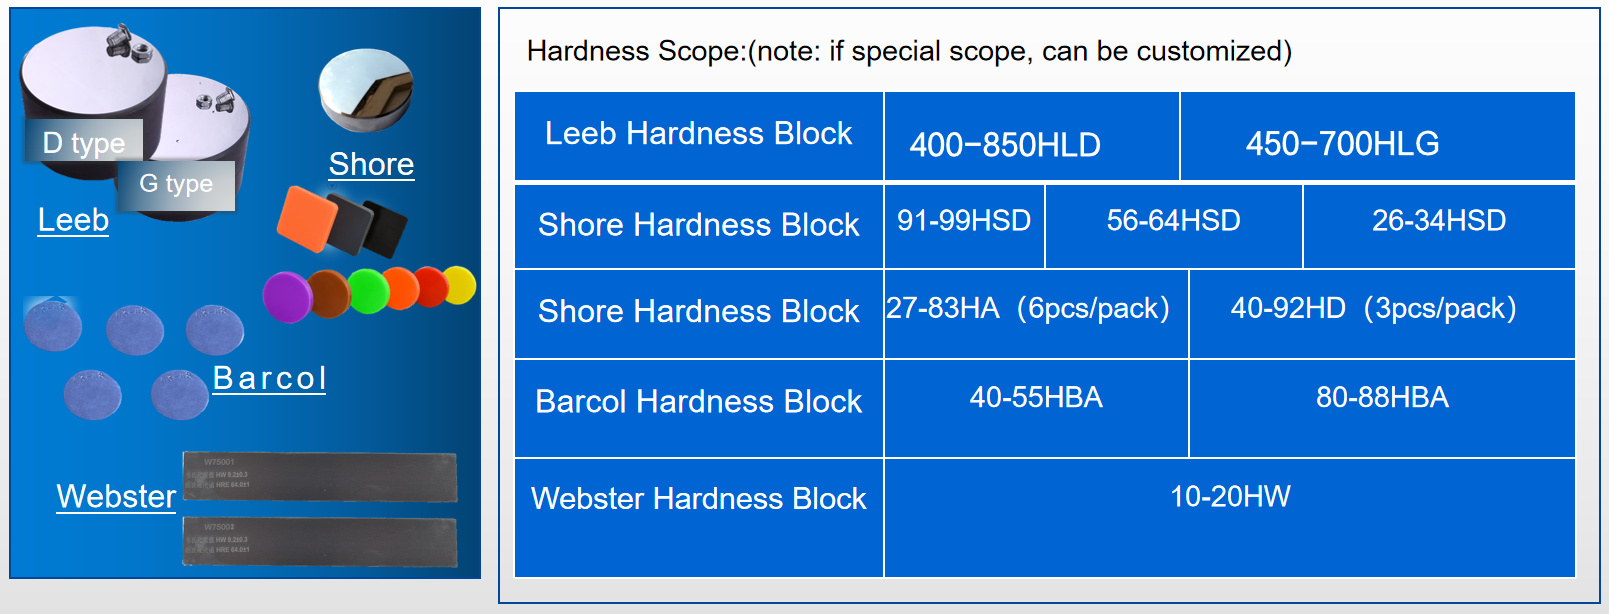 Hardness Scope